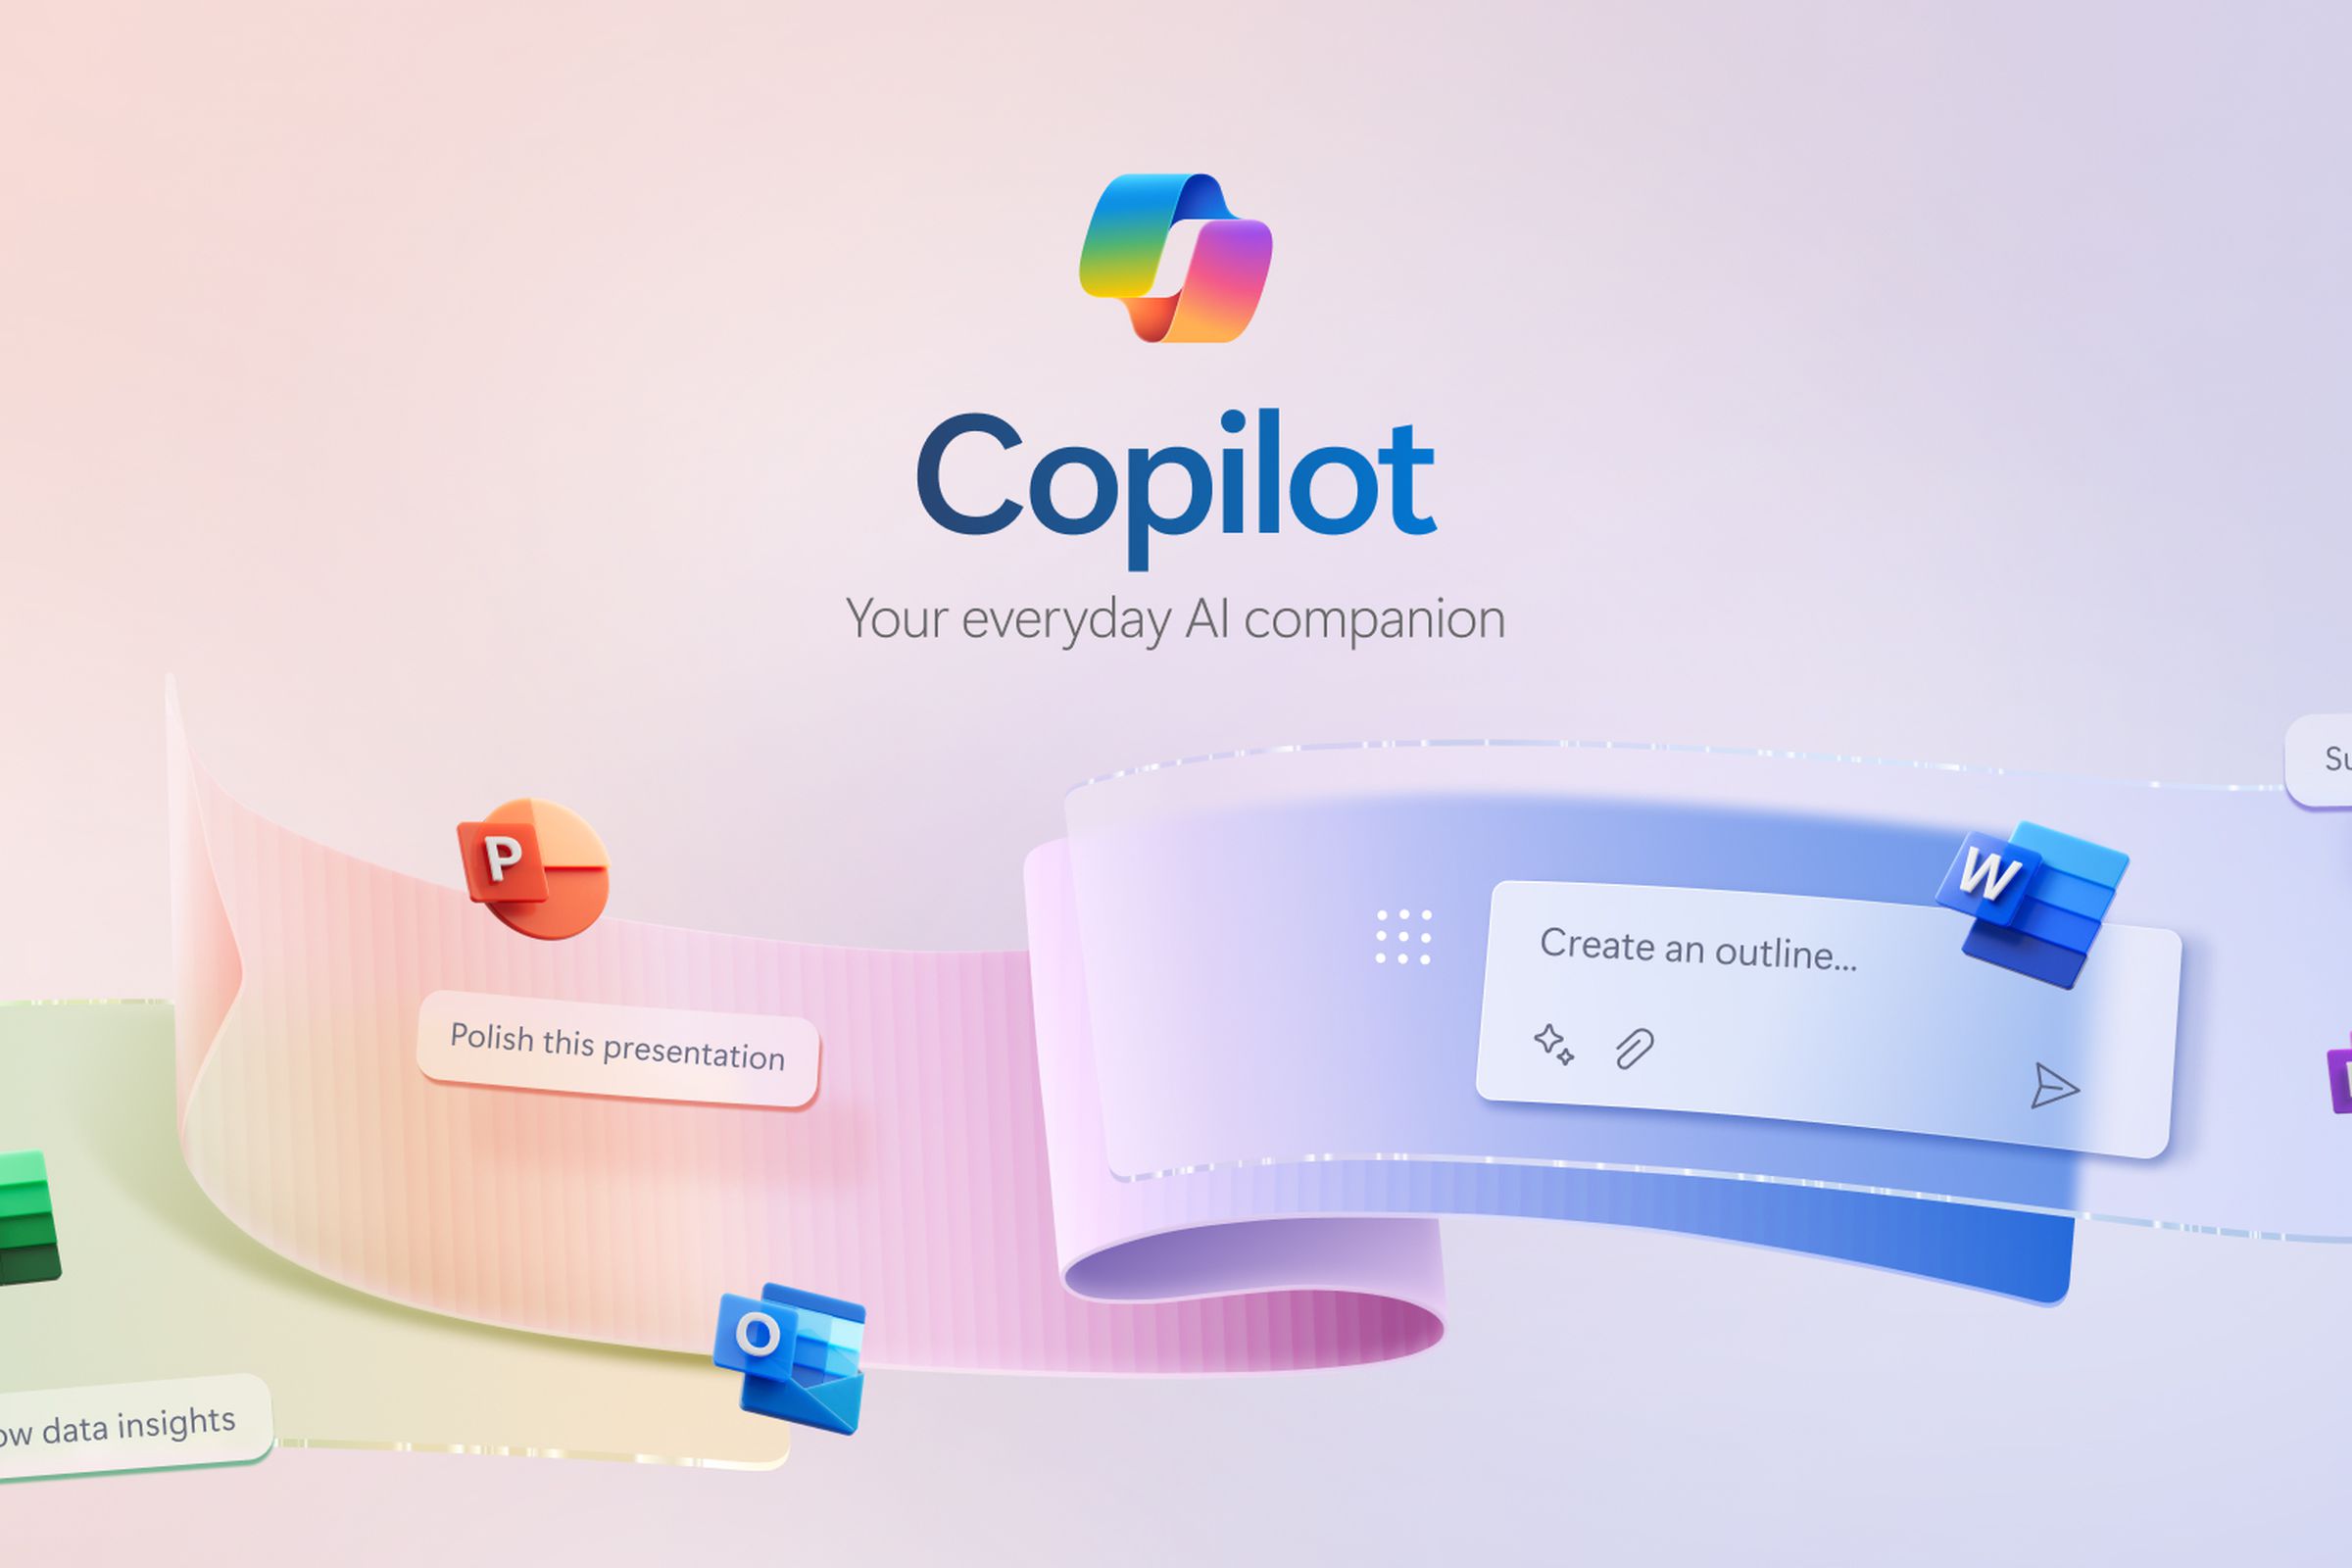 A colorful illustration of Microsoft’s Copilot AI assistant